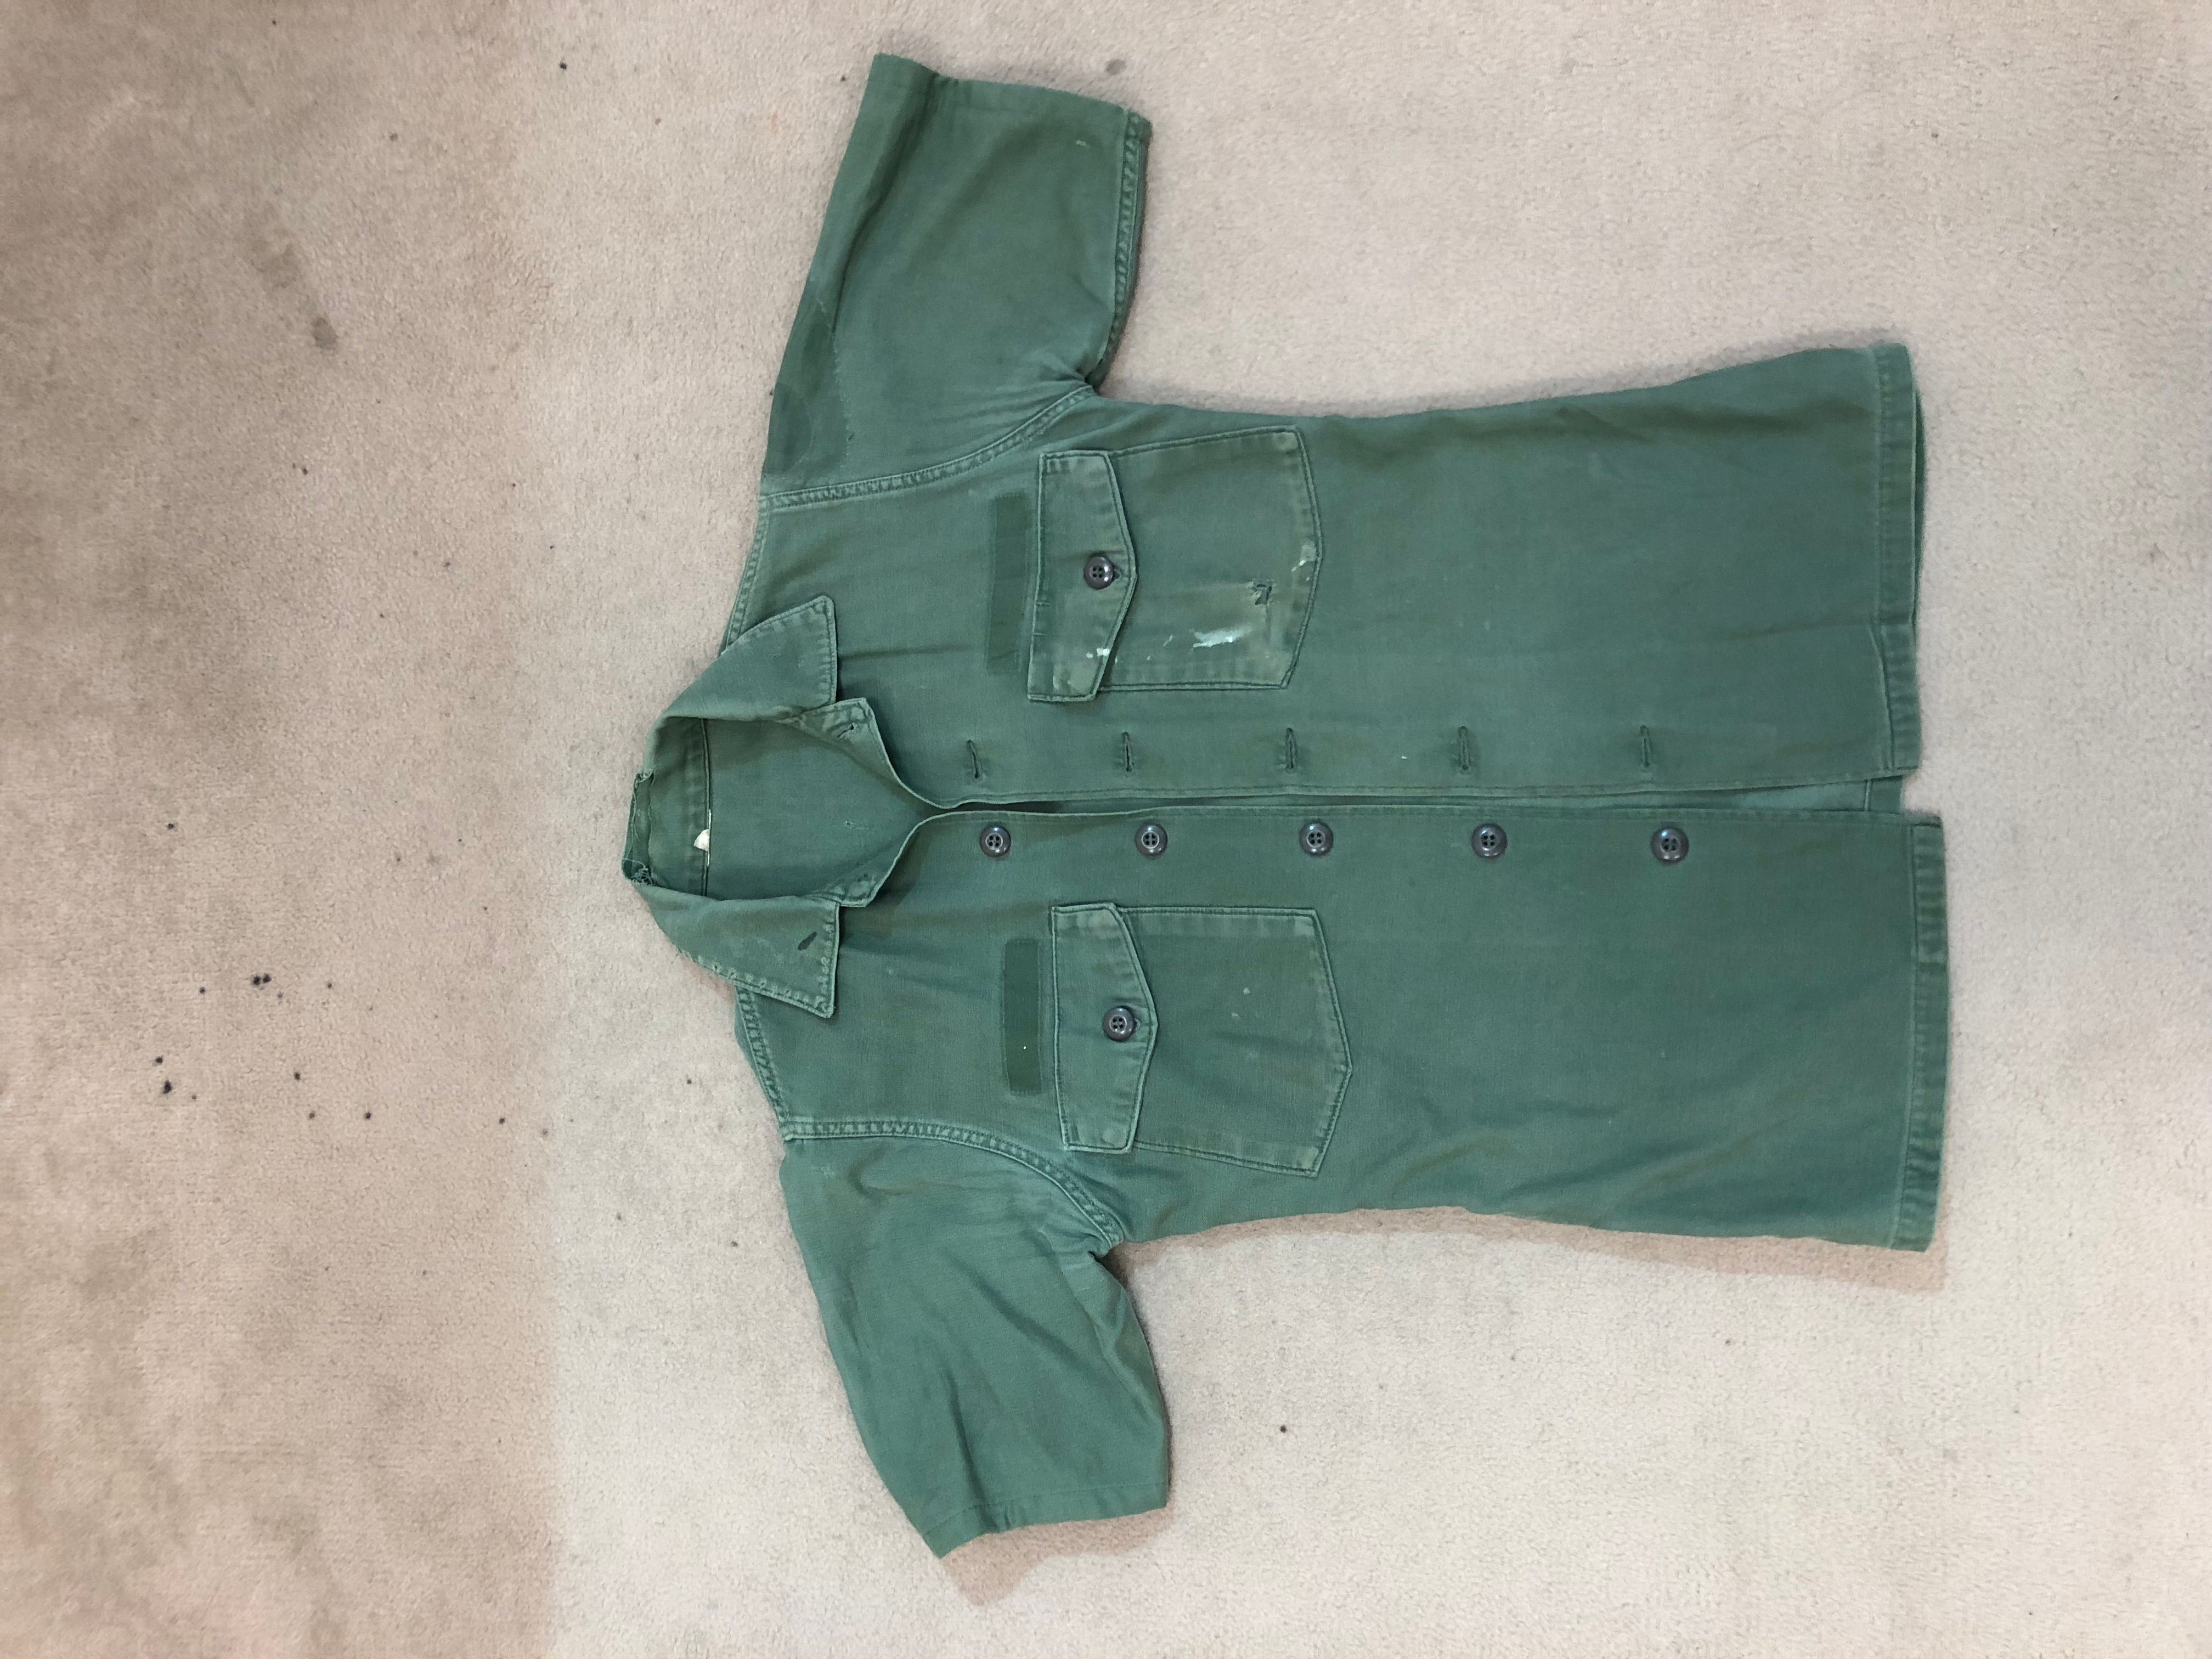 Vintage Vintage Army Shirt Size US S / EU 44-46 / 1 - 1 Preview